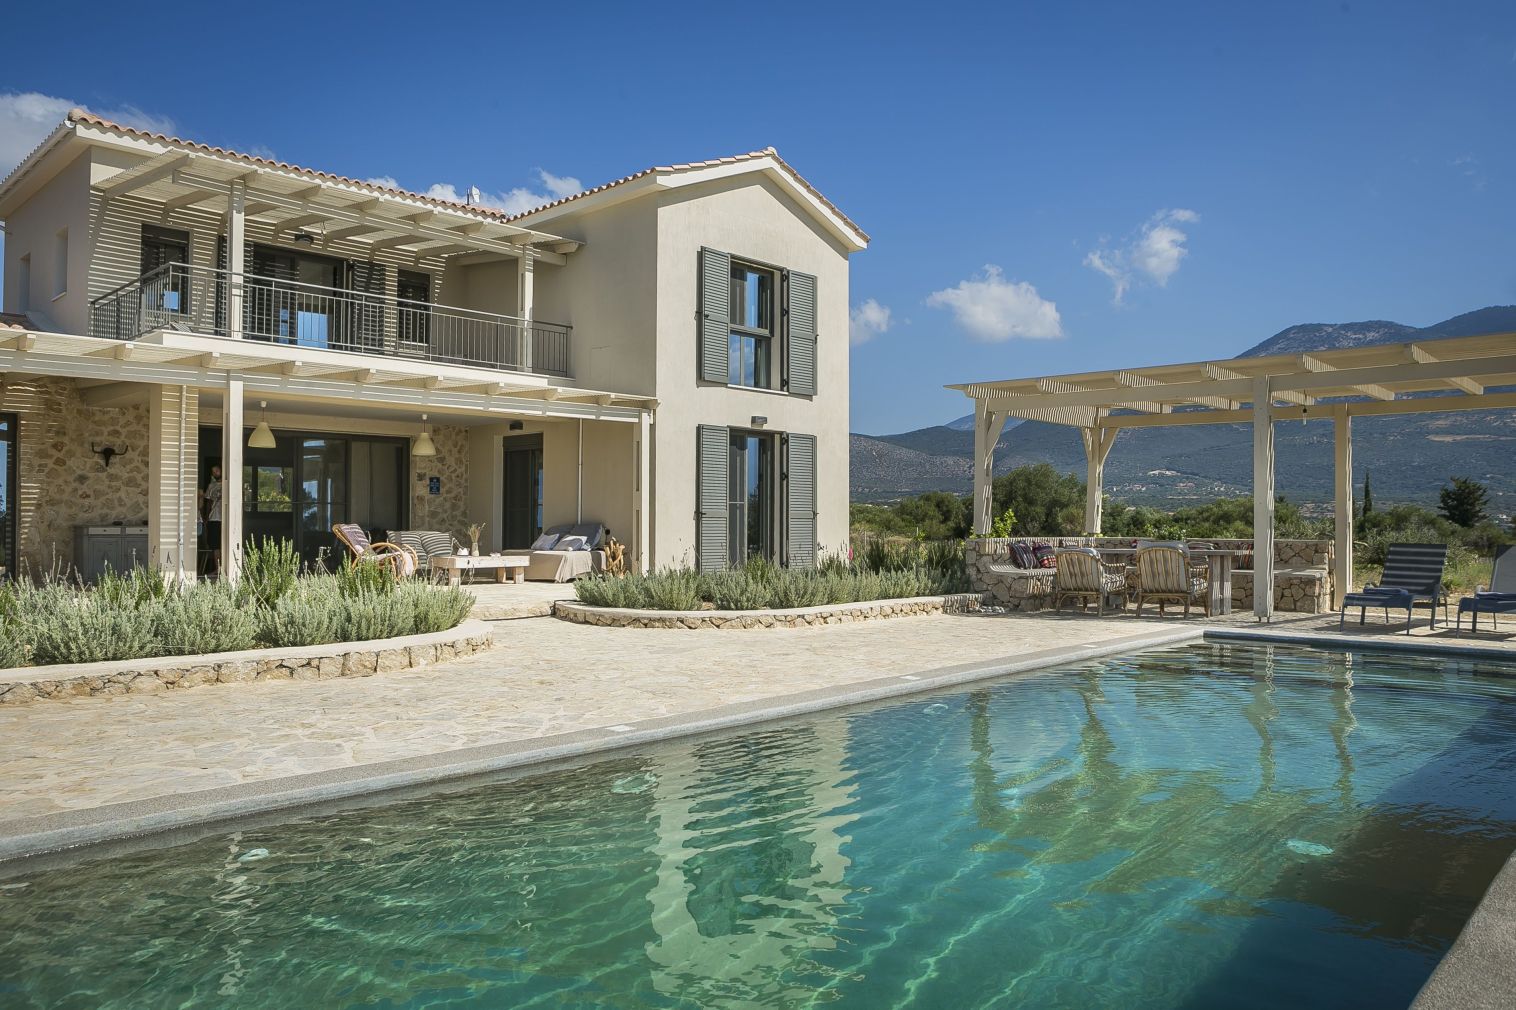 Kefalonia villas: cute 5 bedroom villa with swimming pool, Kefalonia, Greece. Kefalonia holidays